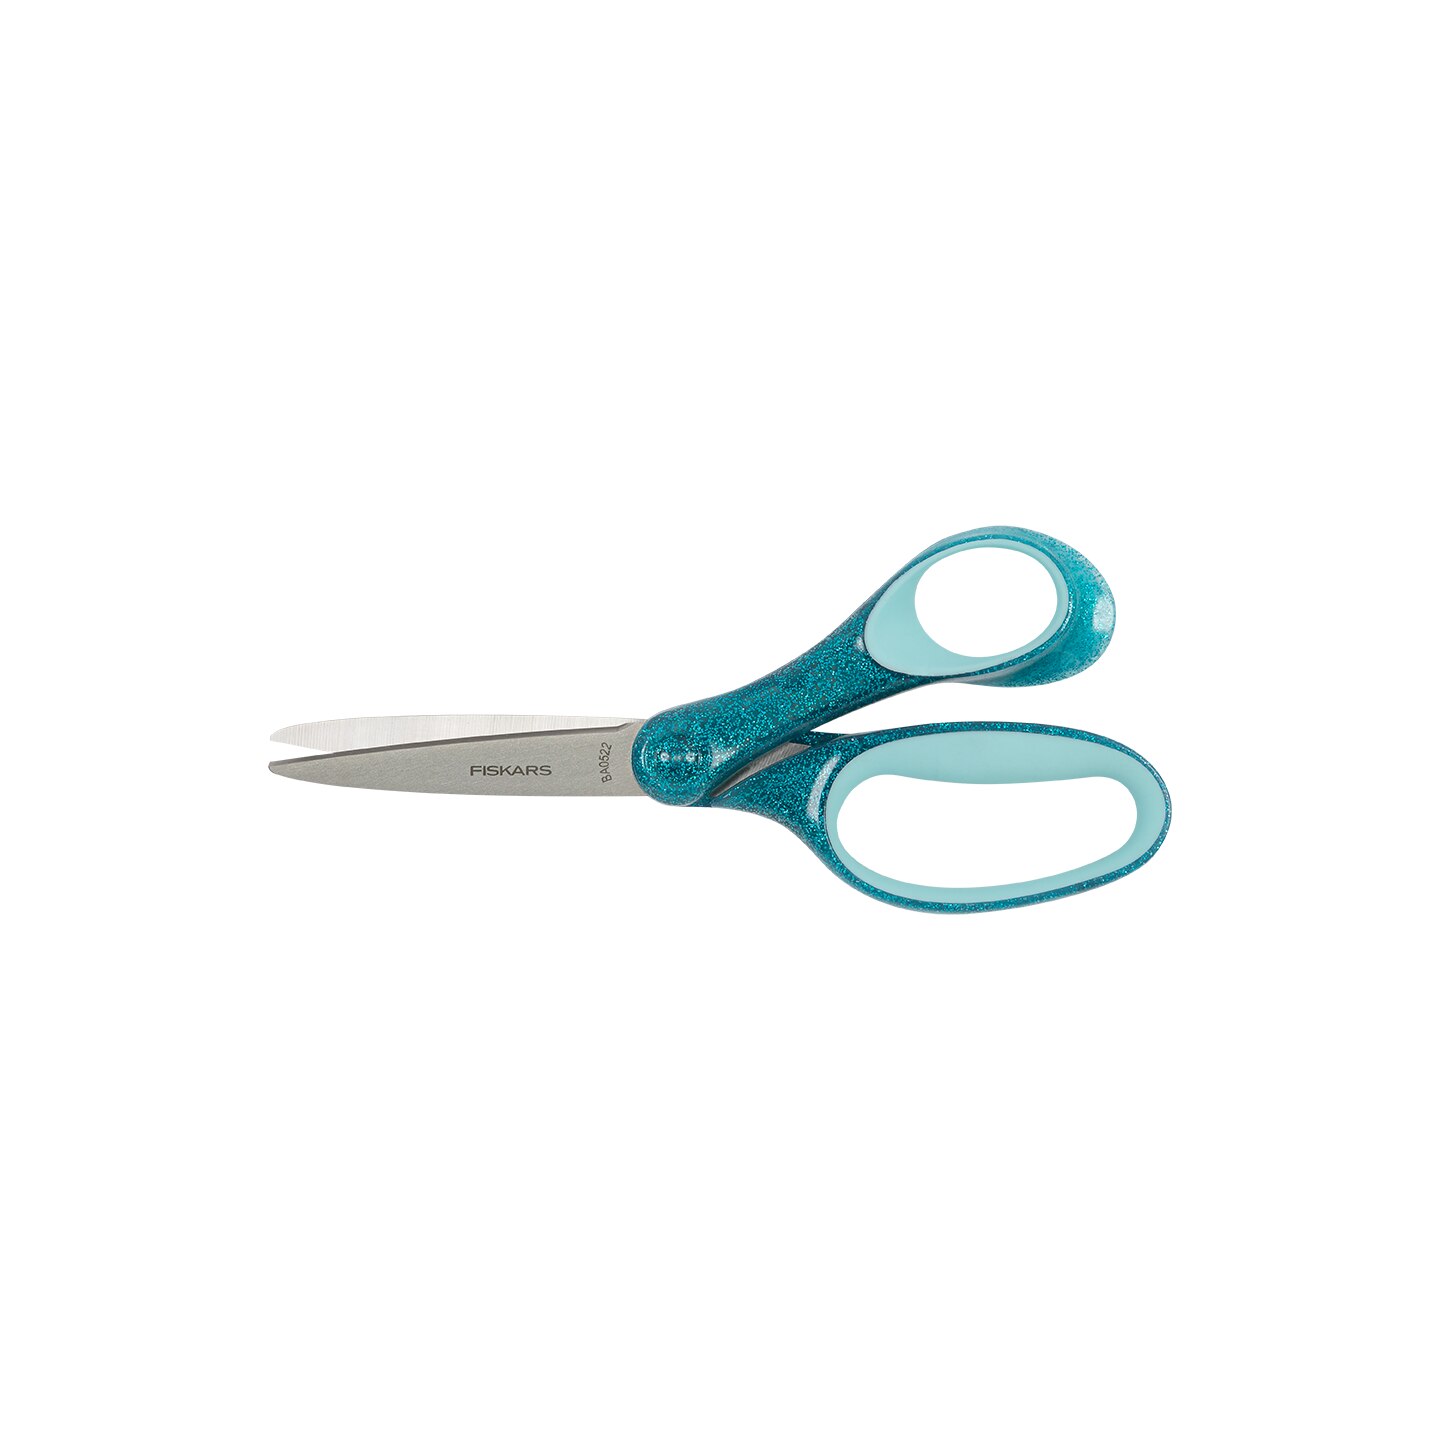 Fiskars Student Scissors - Turquoise - 7 in